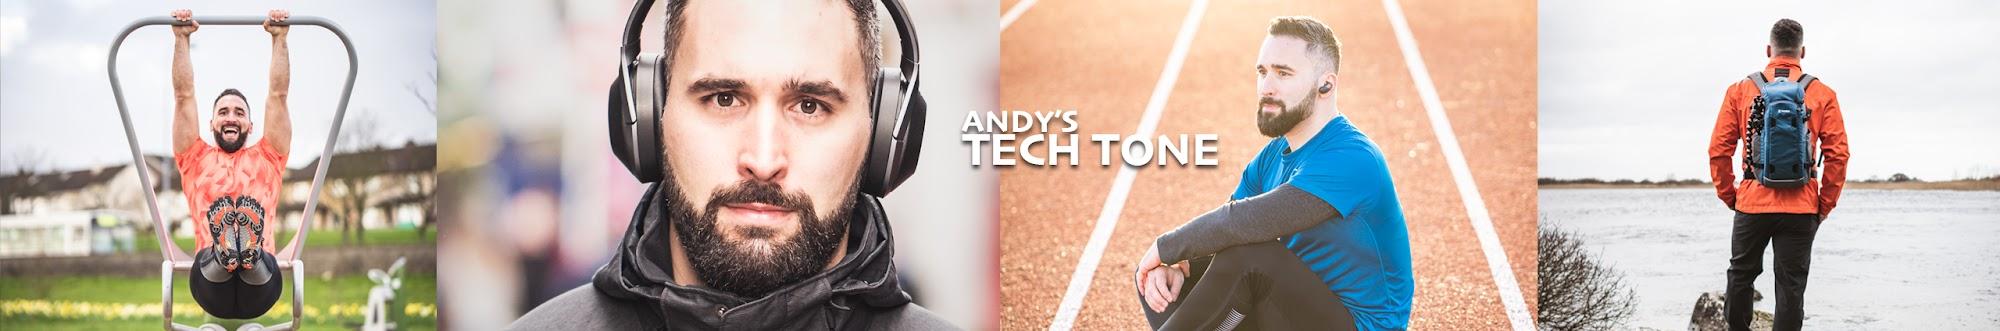 Andy's Tech Tone